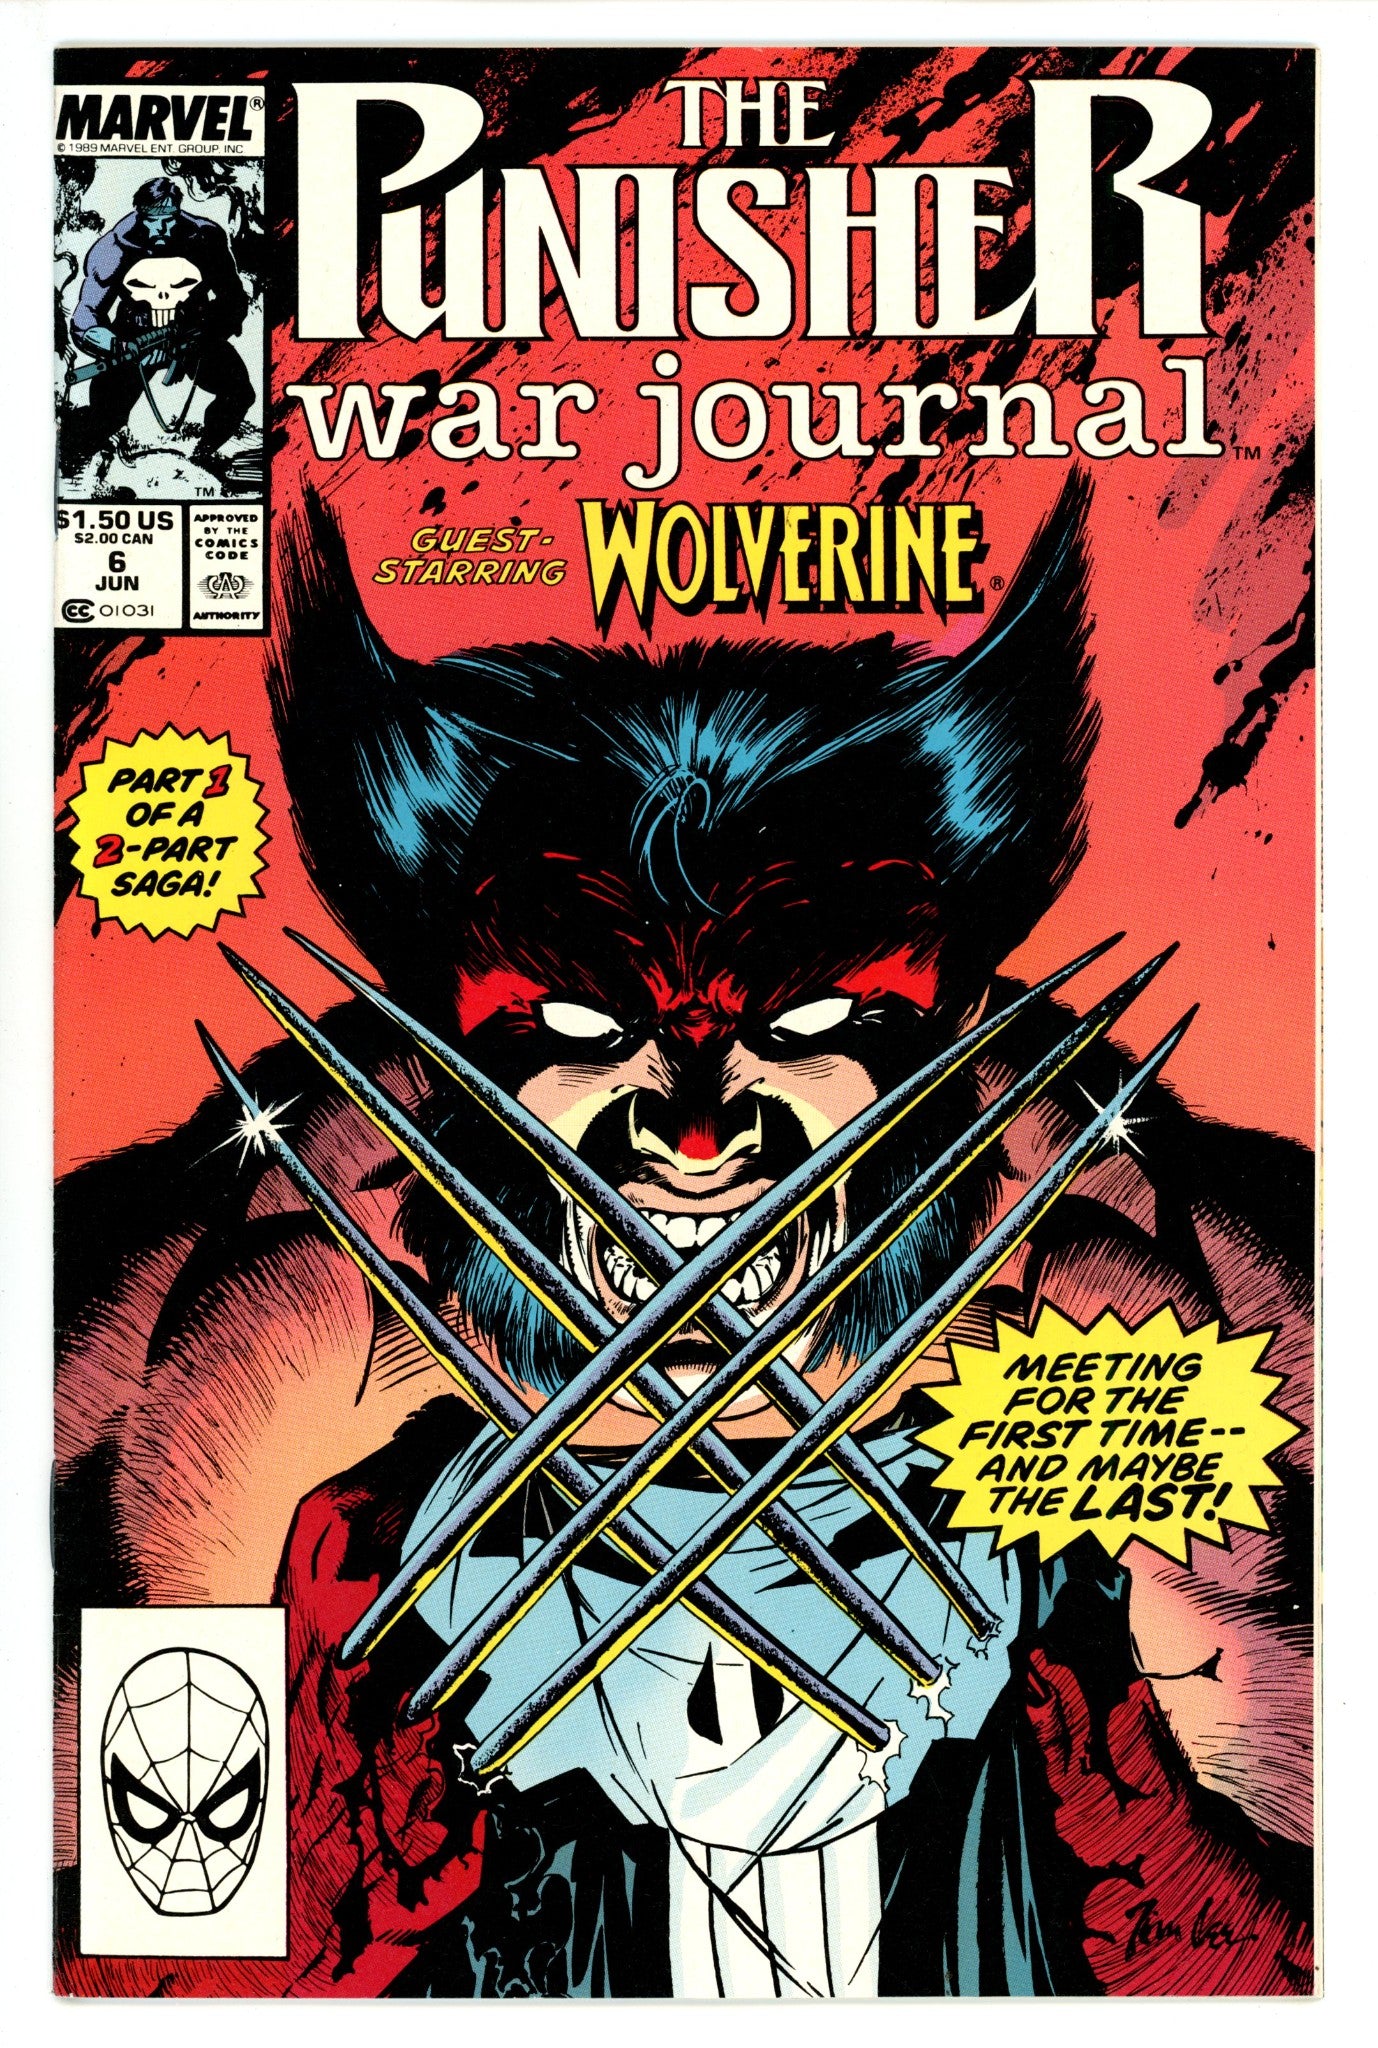 The Punisher War Journal Vol 1 6 NM- (9.2) (1989) 